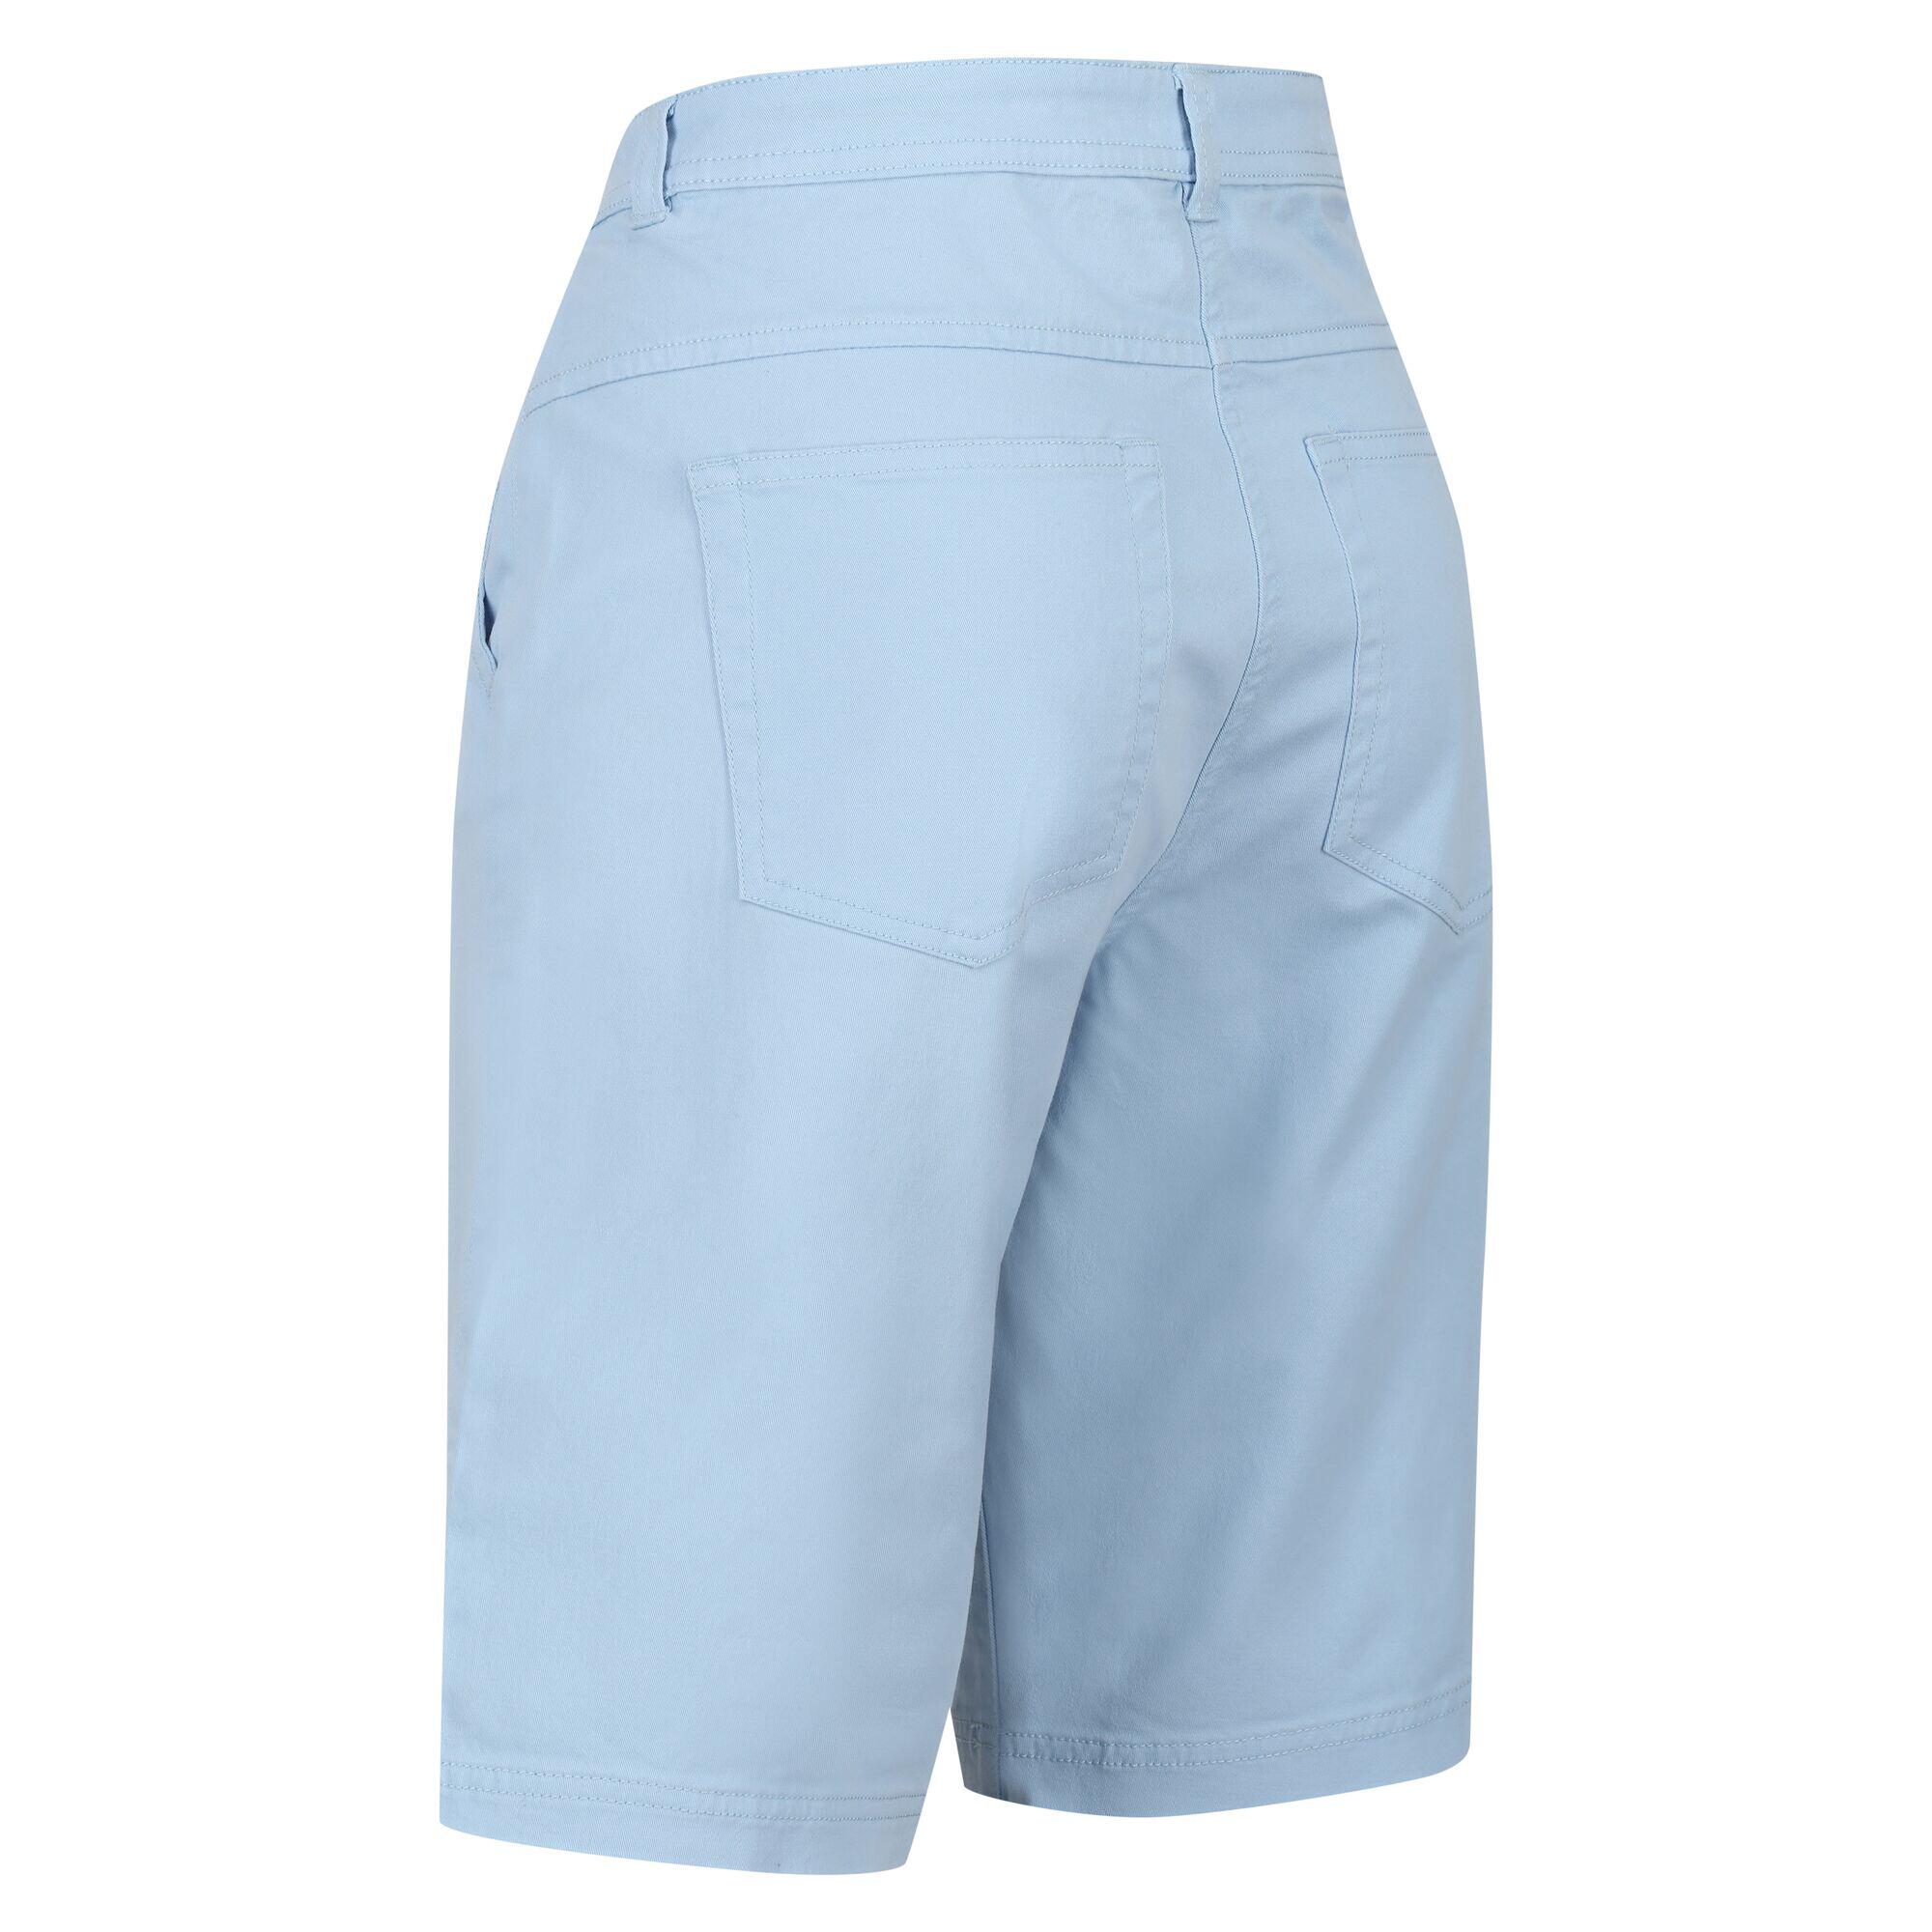 Womens/Ladies Bayla Casual Shorts (Powder Blue) 4/5